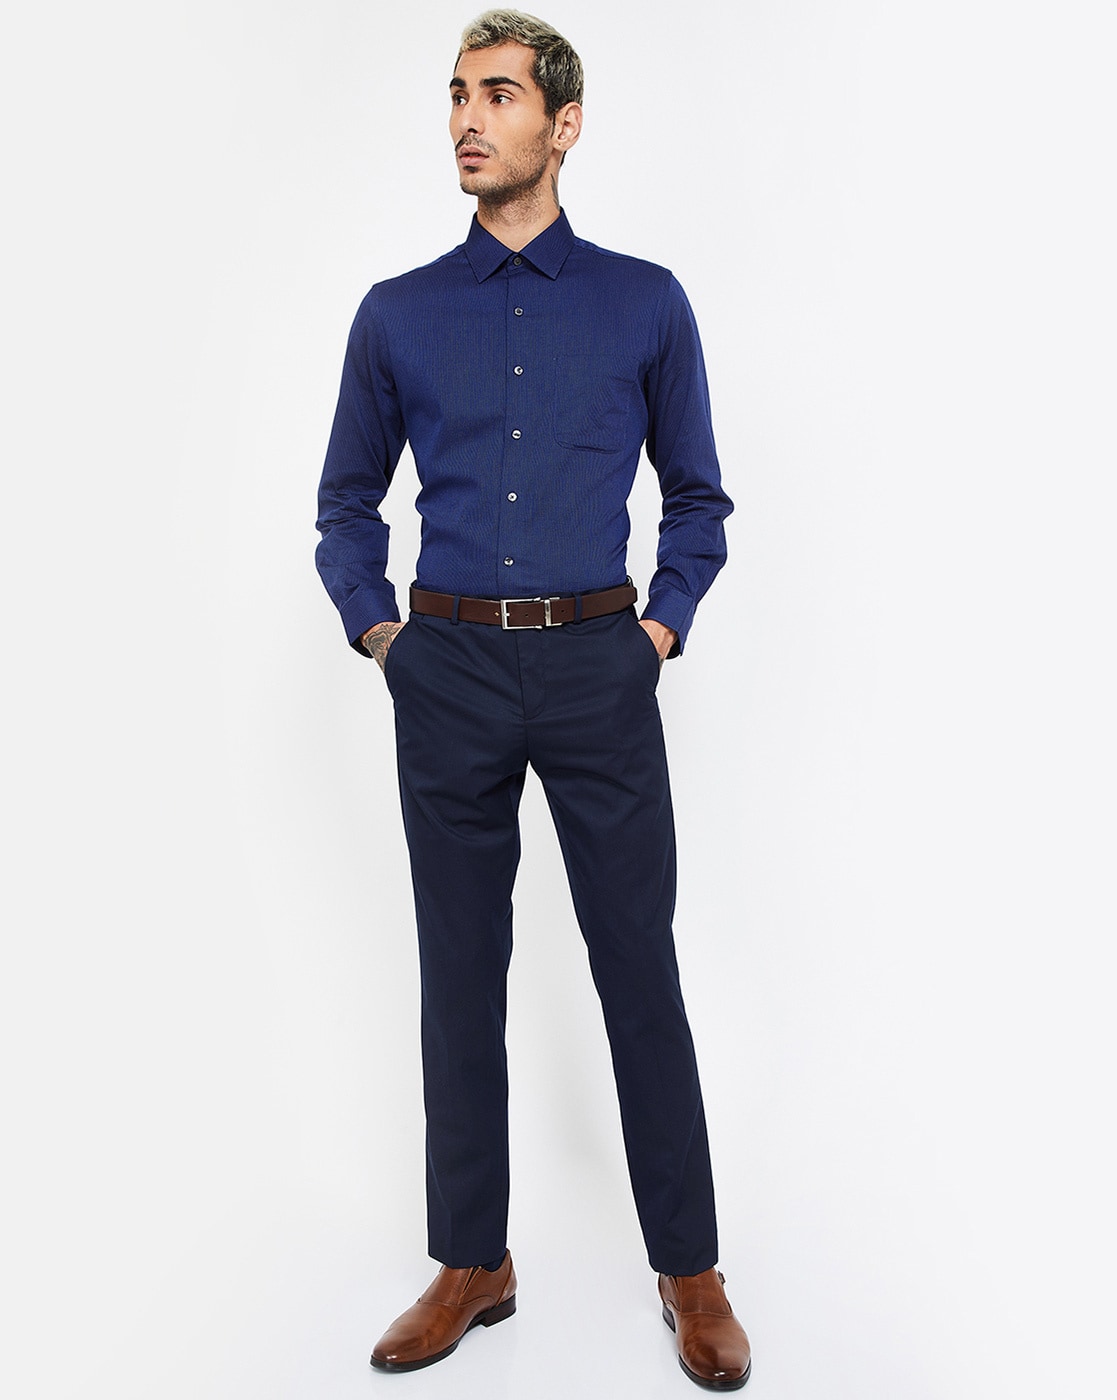 Trendy Navy Blue Shirt and Black Pants For Men